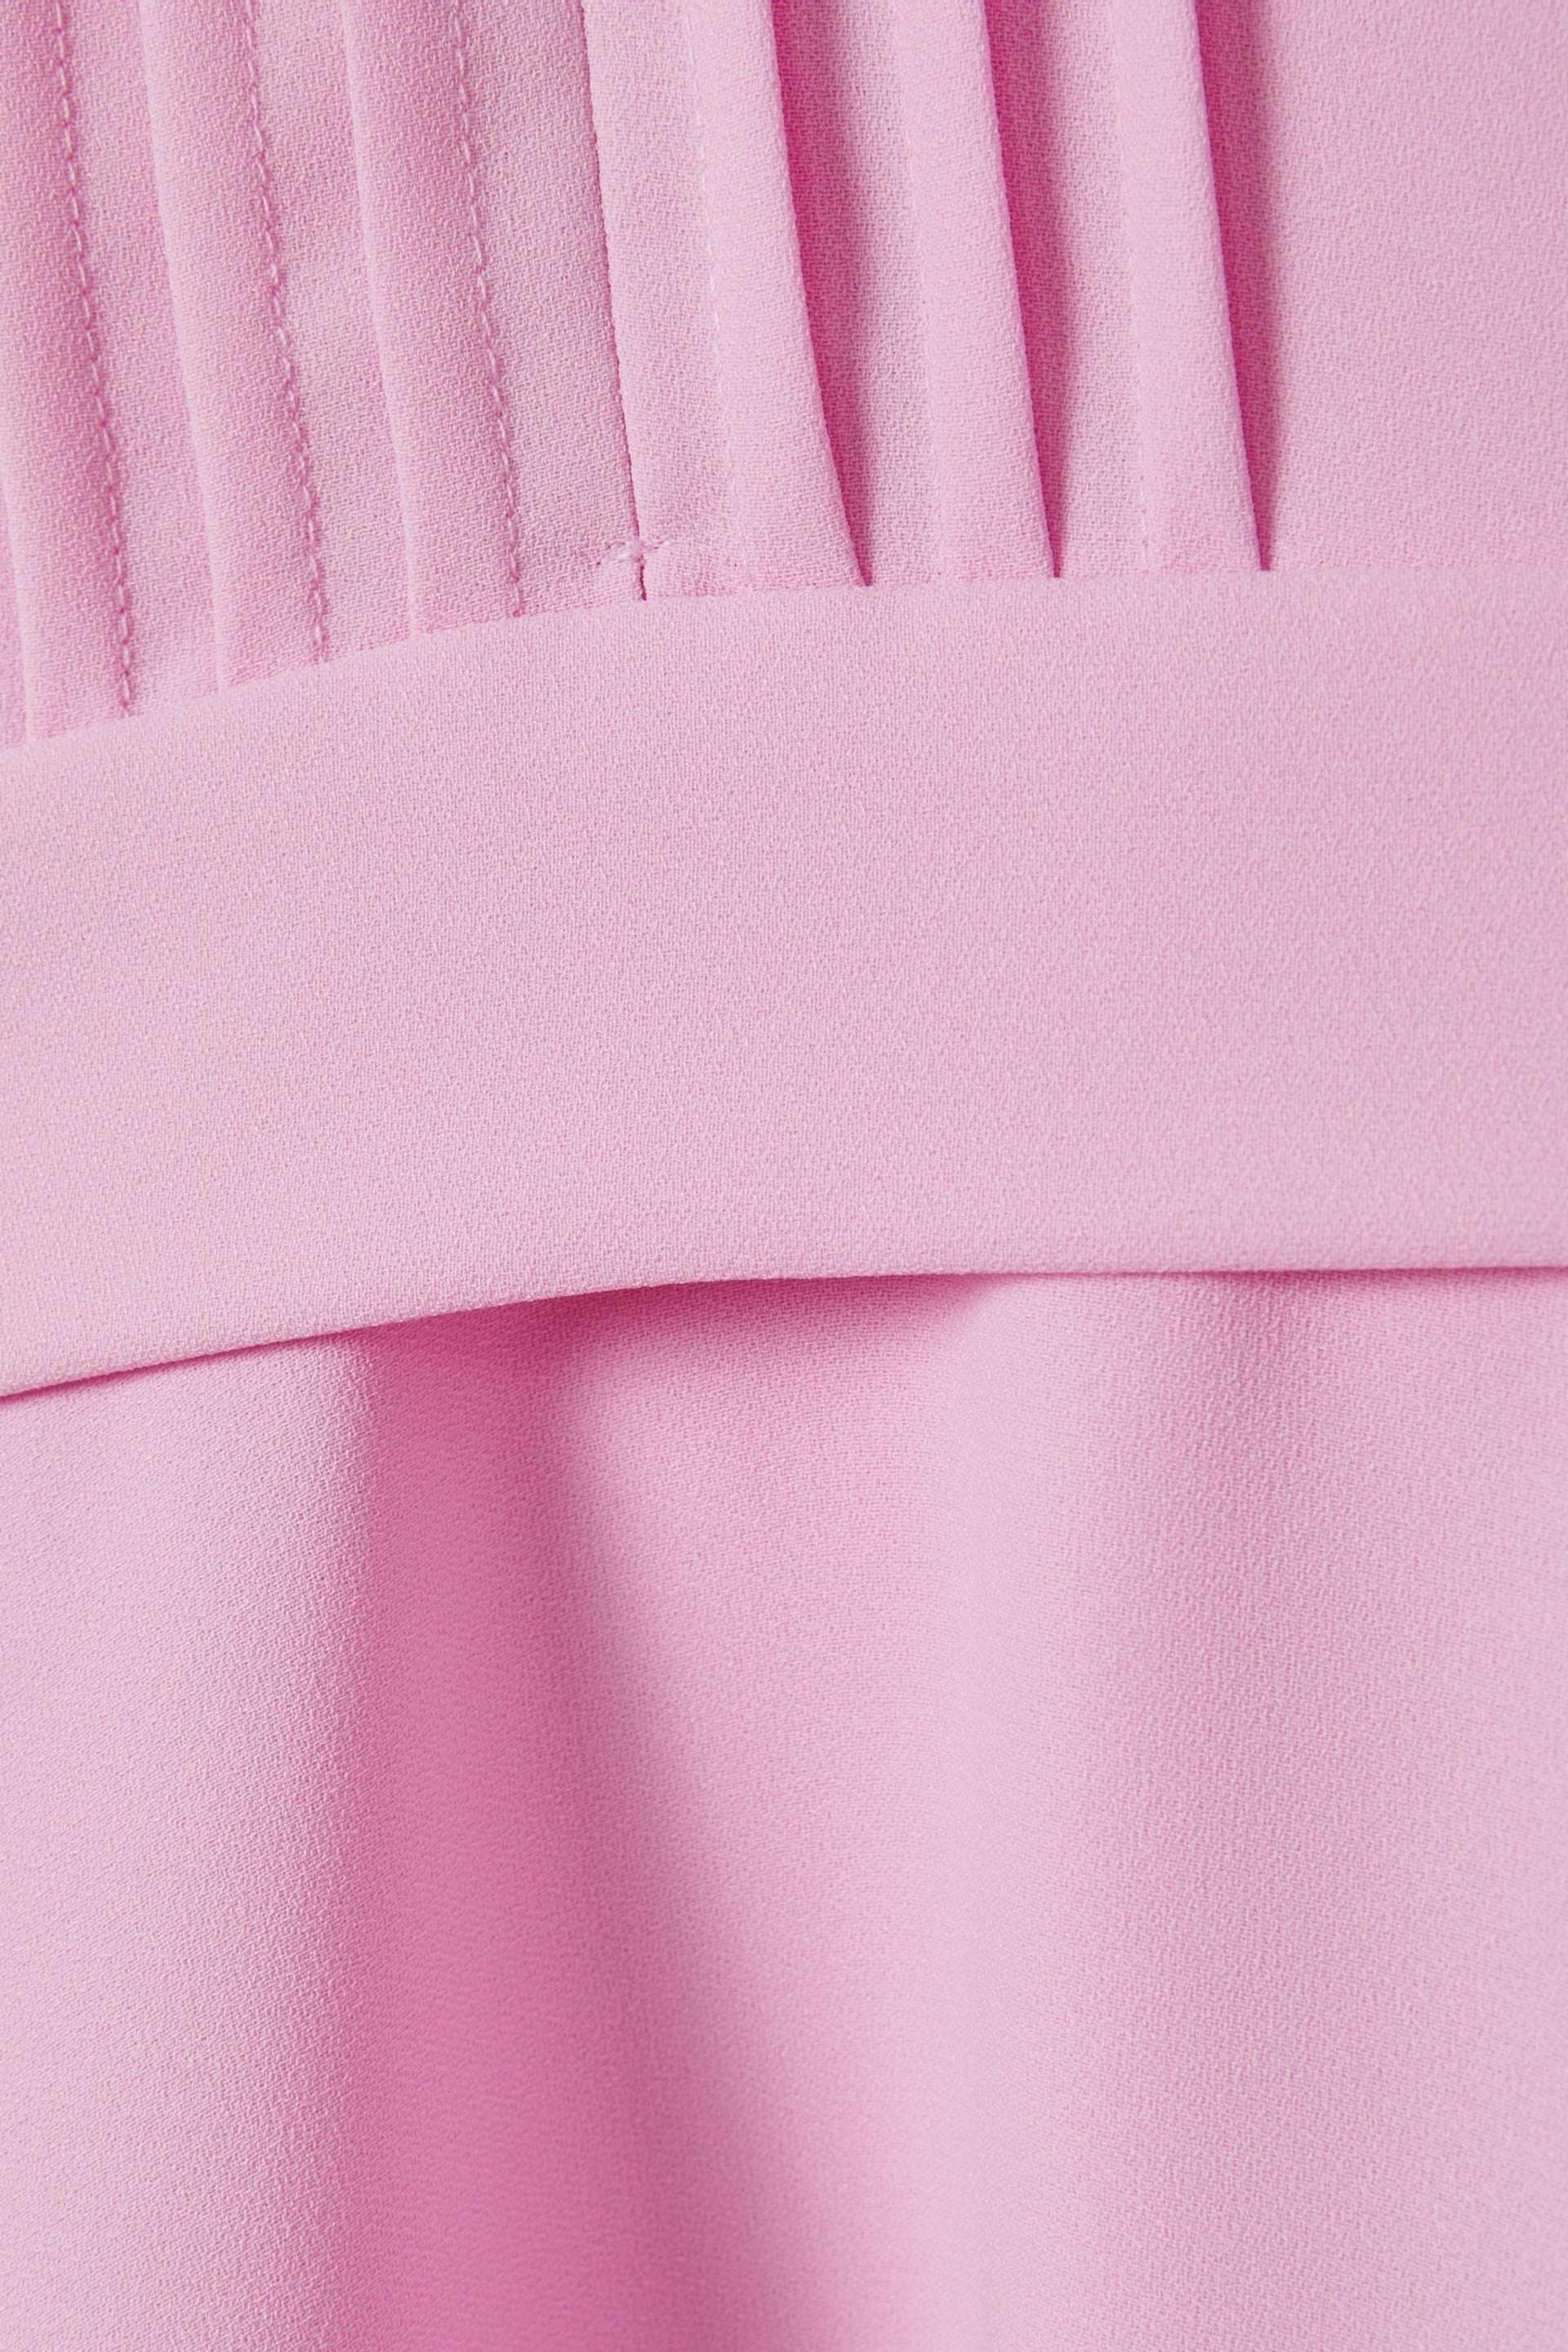 Reiss Pink Erica Junior Zip Front Asymmetric Dress - Image 6 of 6